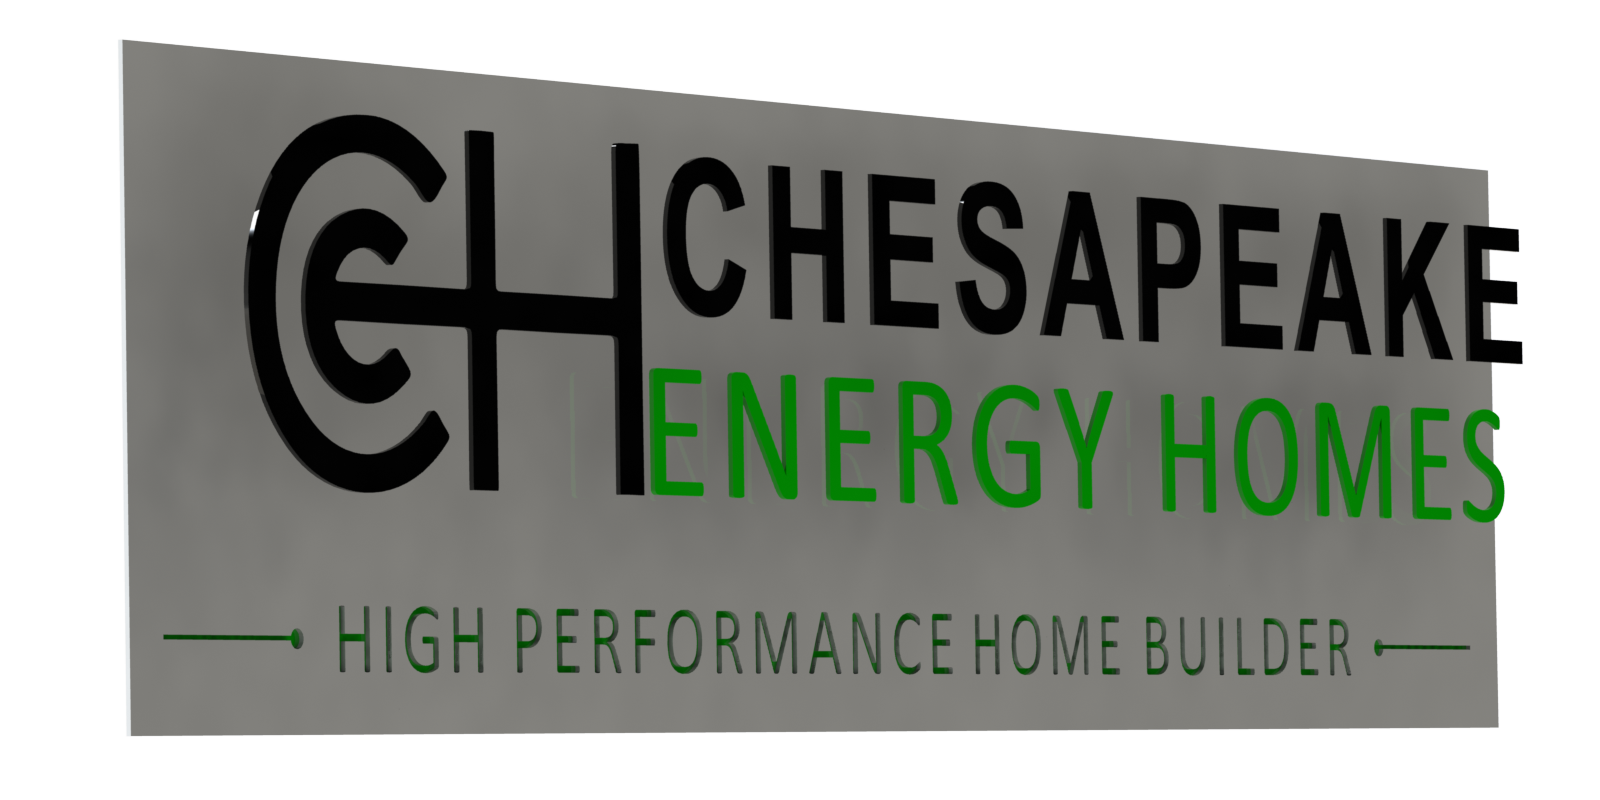 Chesapeake Energy Homes - Left.png